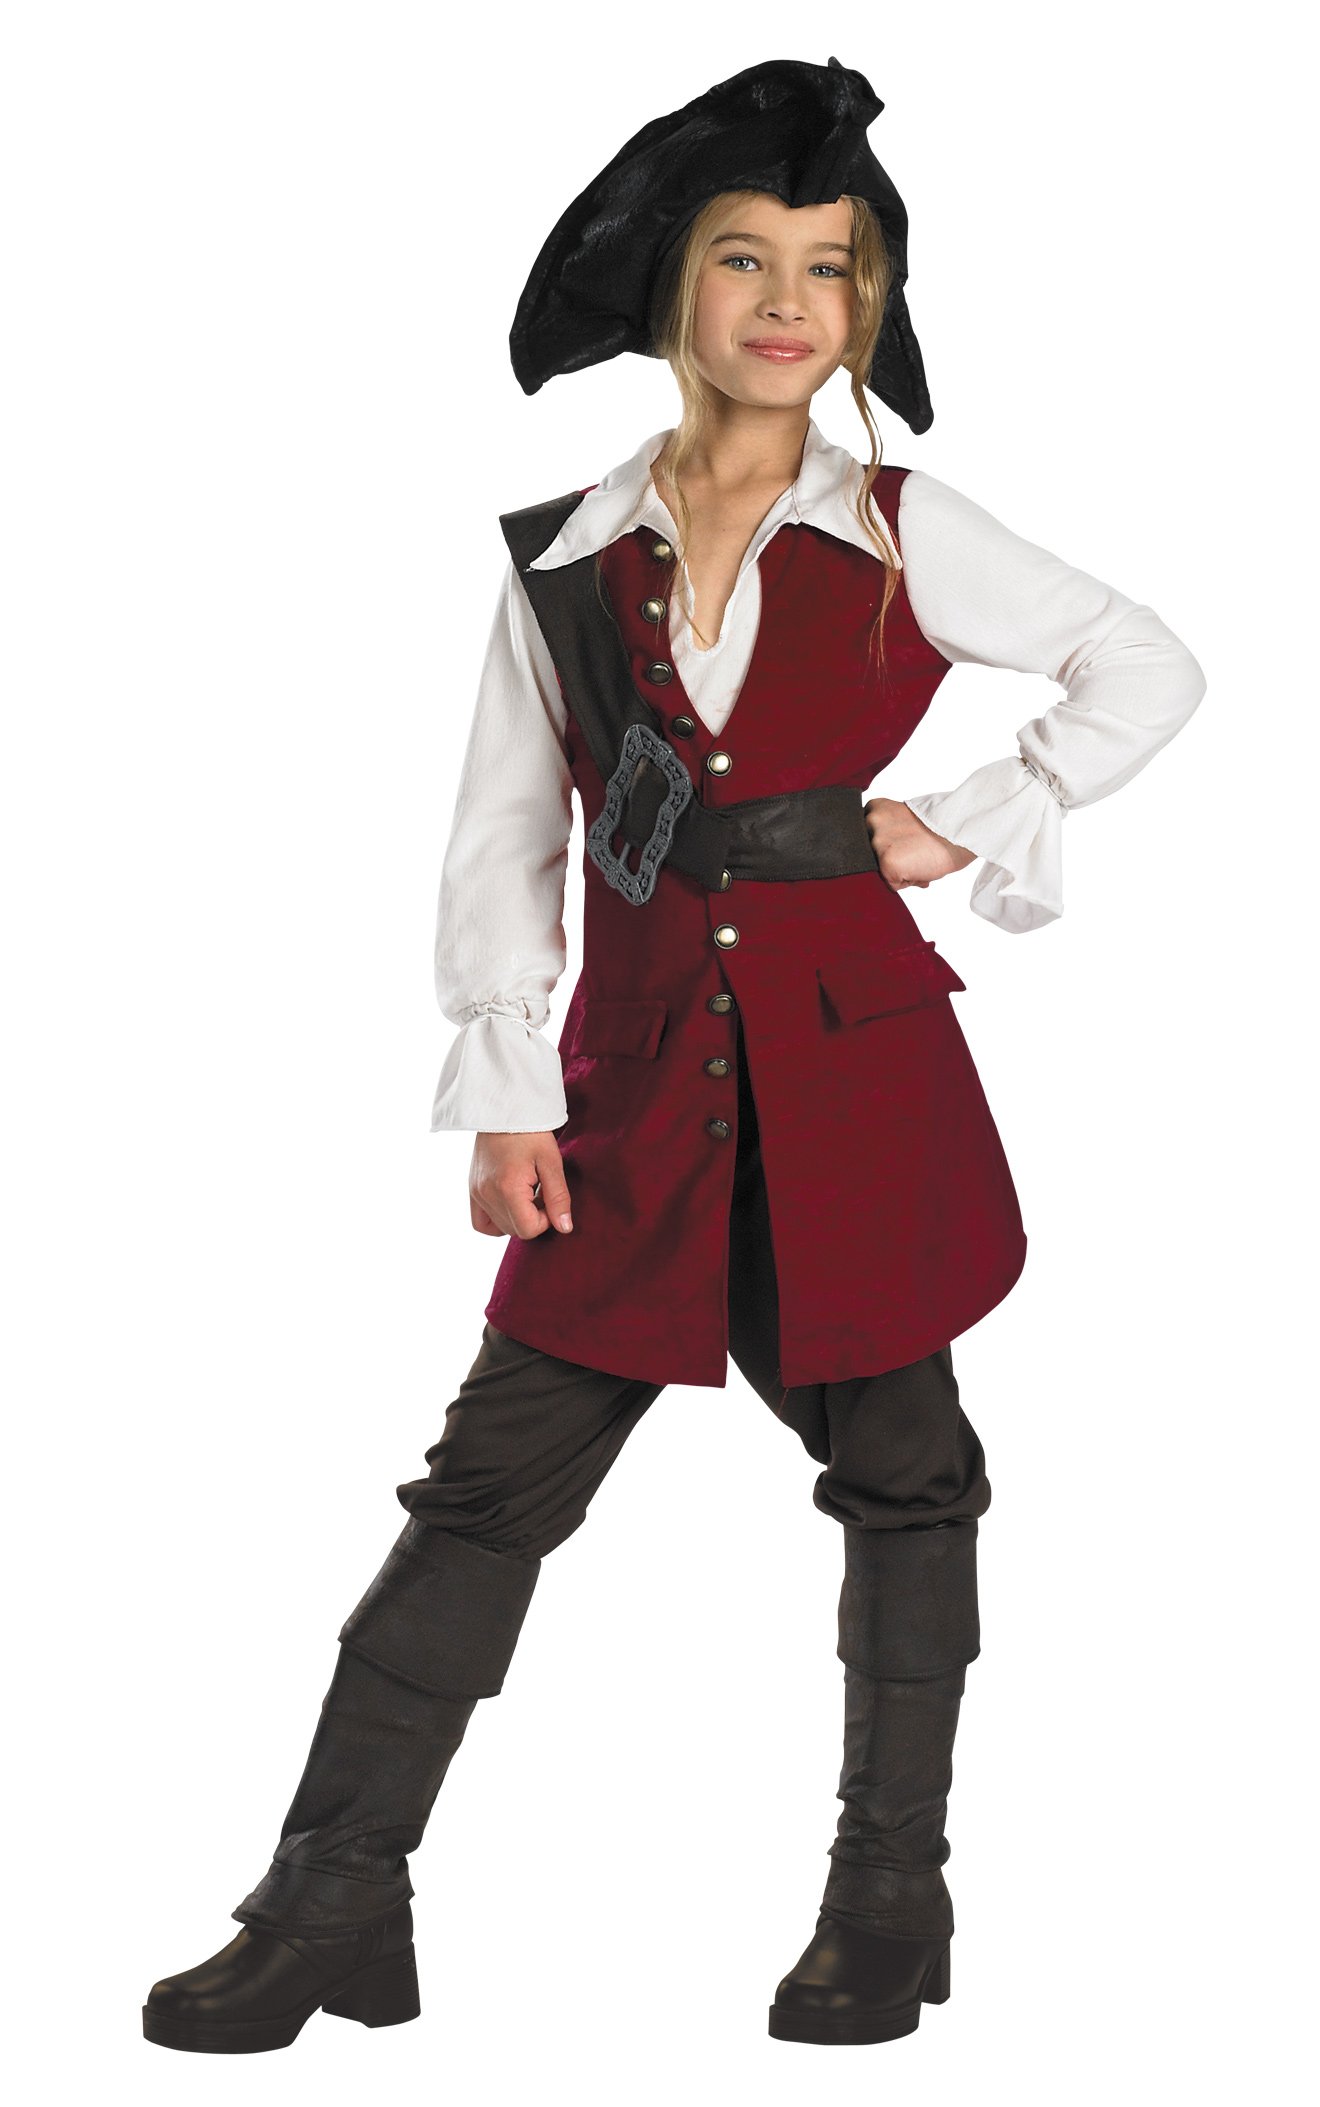 Pirates of the Caribbean - Elizabeth Pirate Deluxe Child Costume